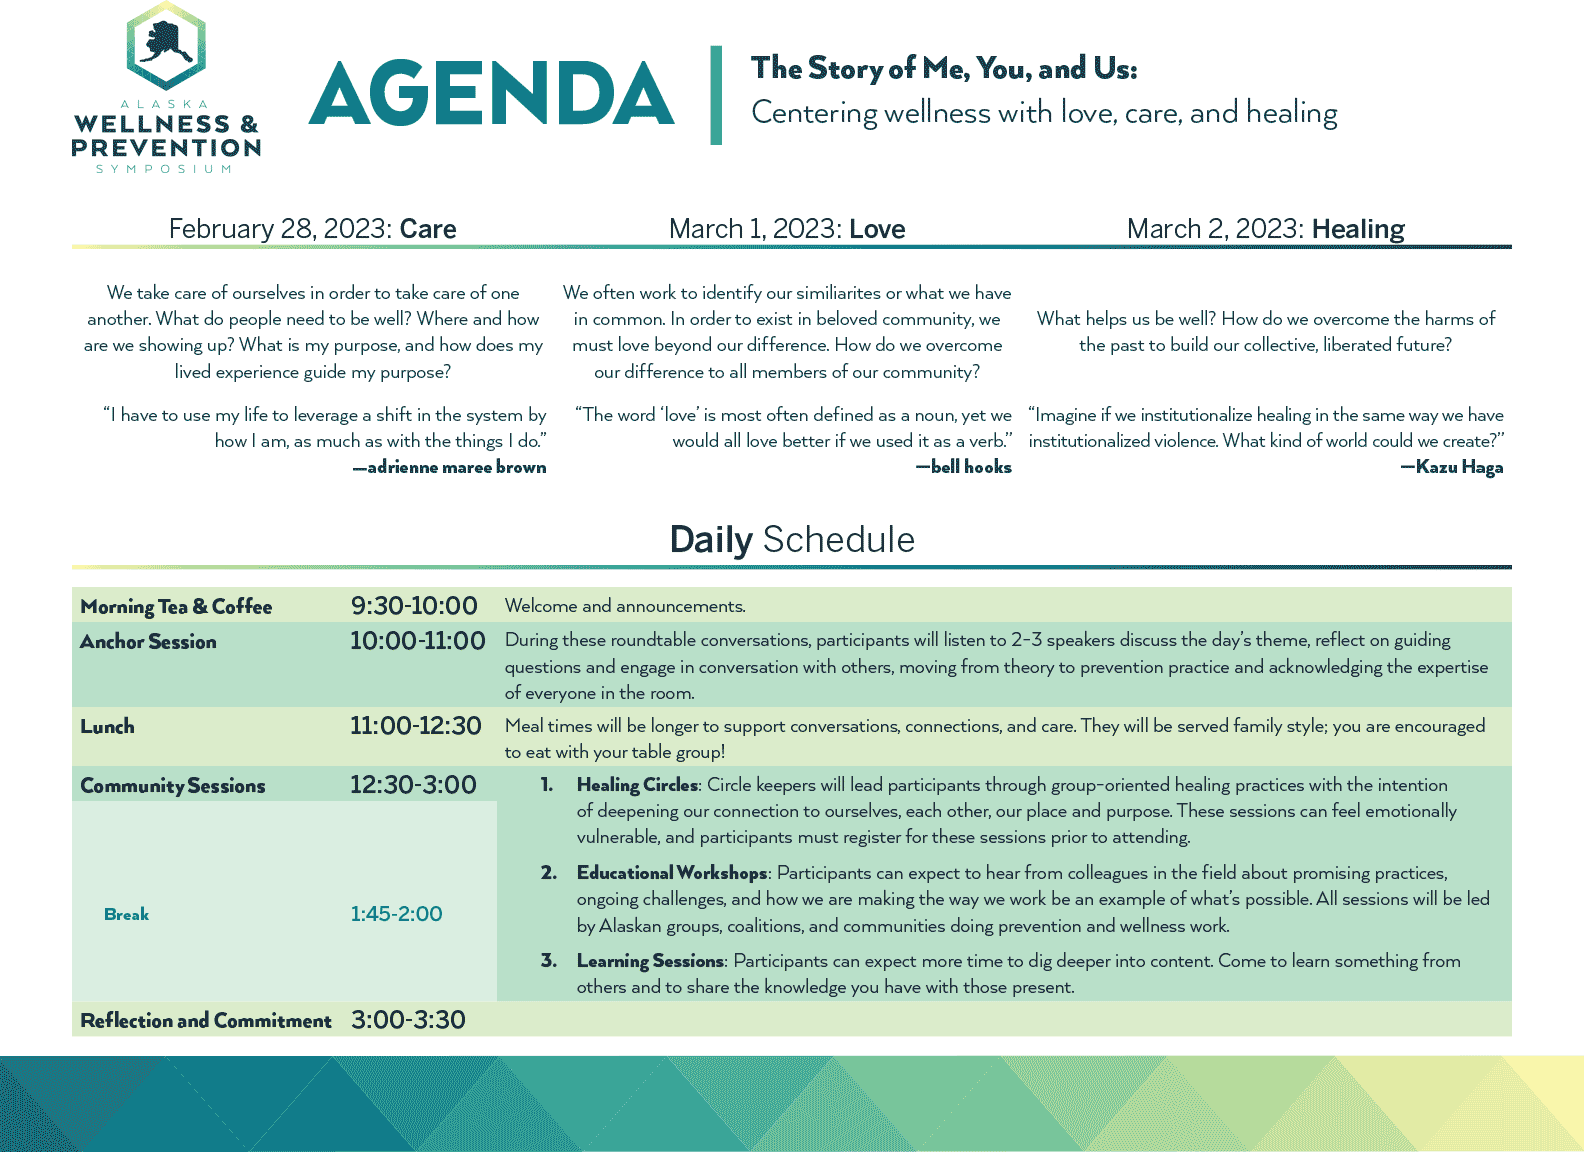 Agenda at a Glance